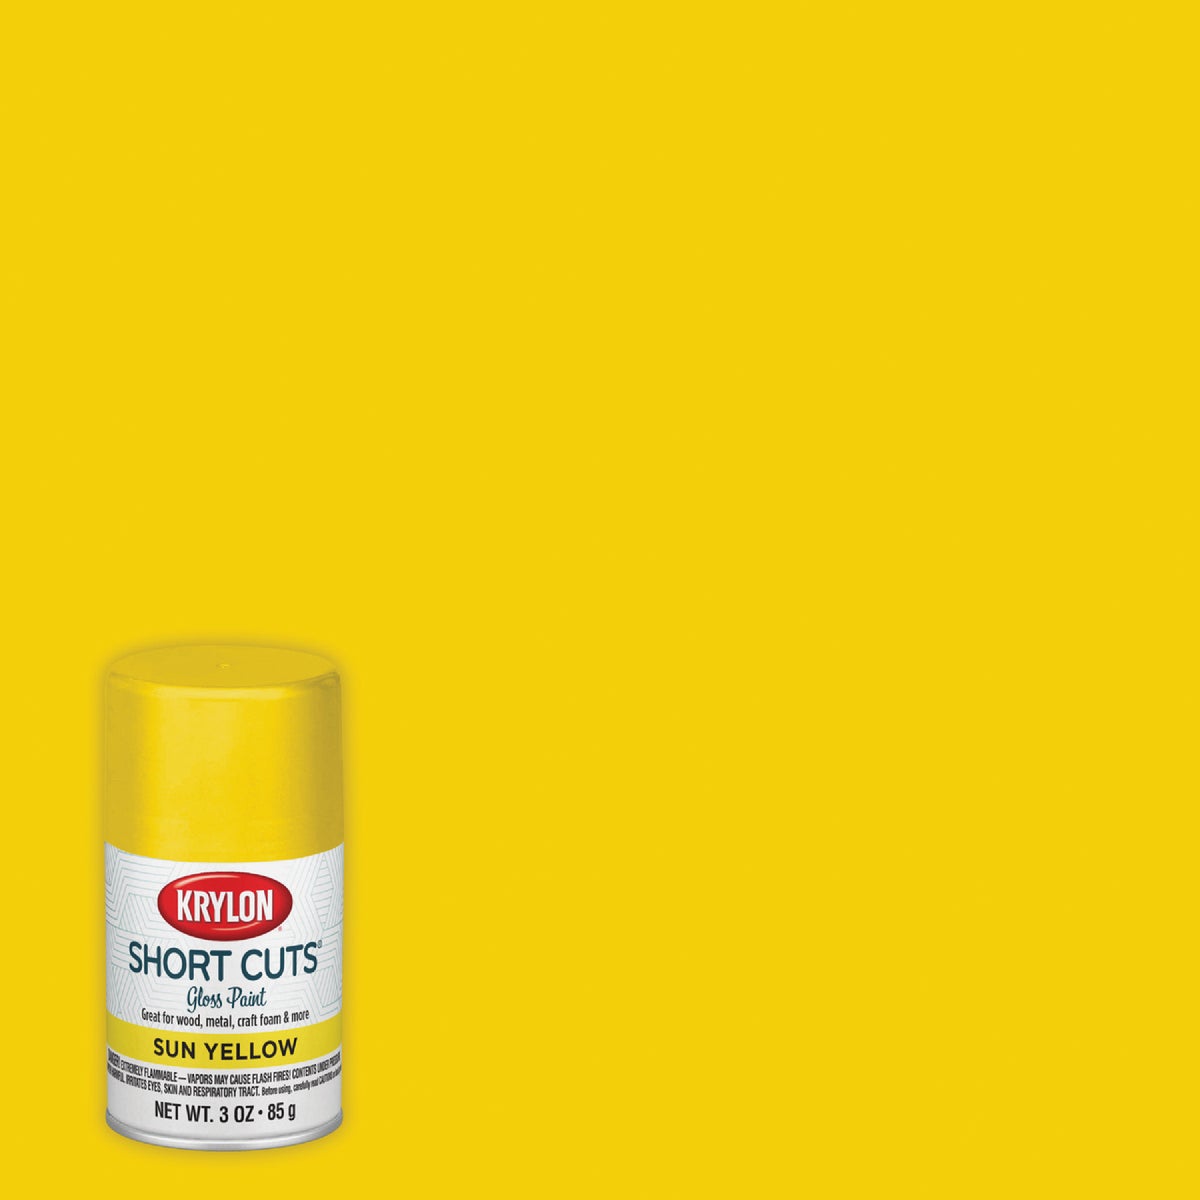 Krylon Short Cuts 3 Oz. High-Gloss Enamel Spray Paint, Sun Yellow